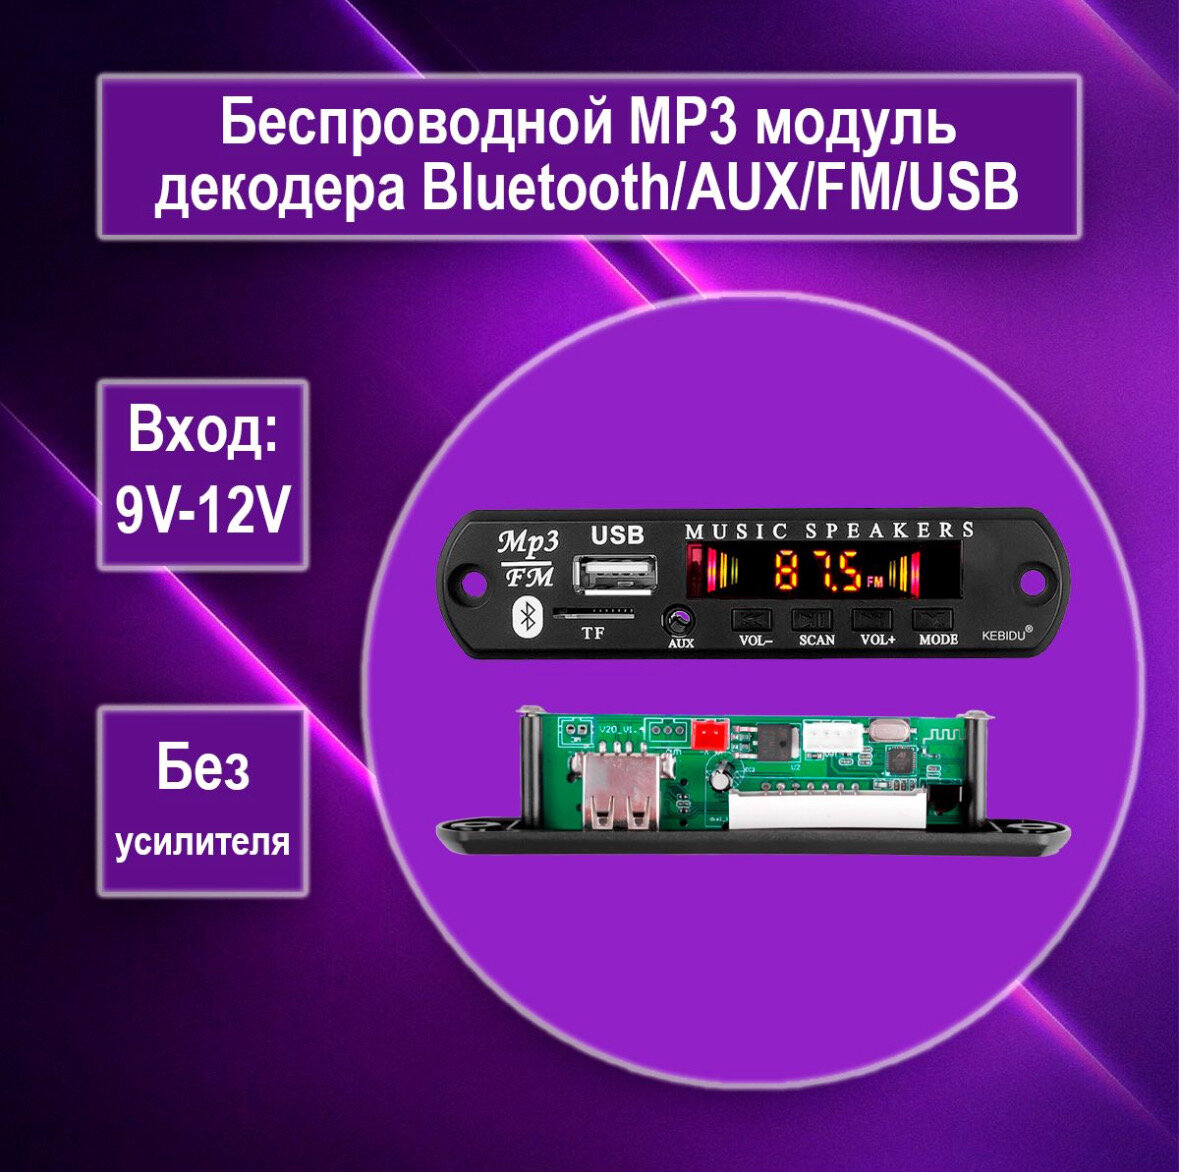 Беспроводной модуль декодер Bluetooth mp3 wma aux tf usb 9-12V модуль